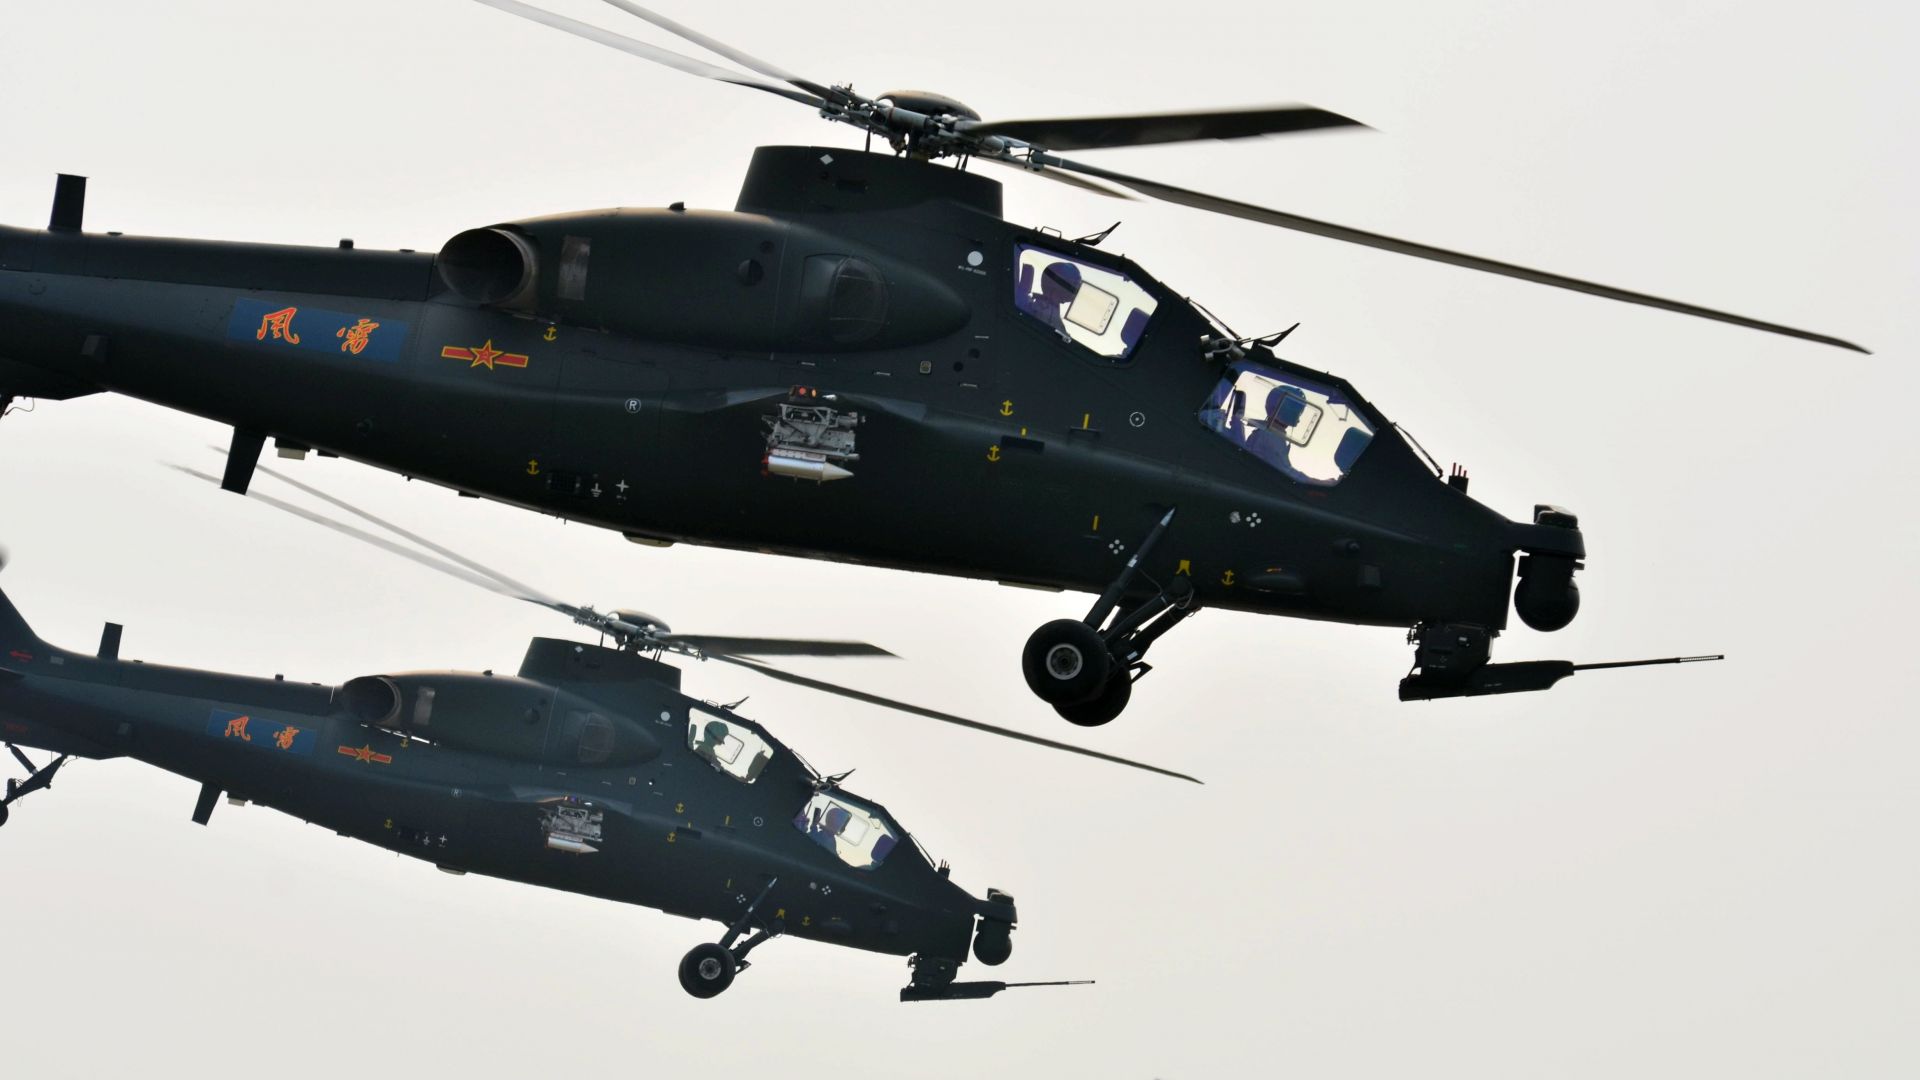 Цаиц З-10, , ударный вертолет, ВВС Китая, CAIC Z-10, attack helicopter, China Air Force (horizontal)